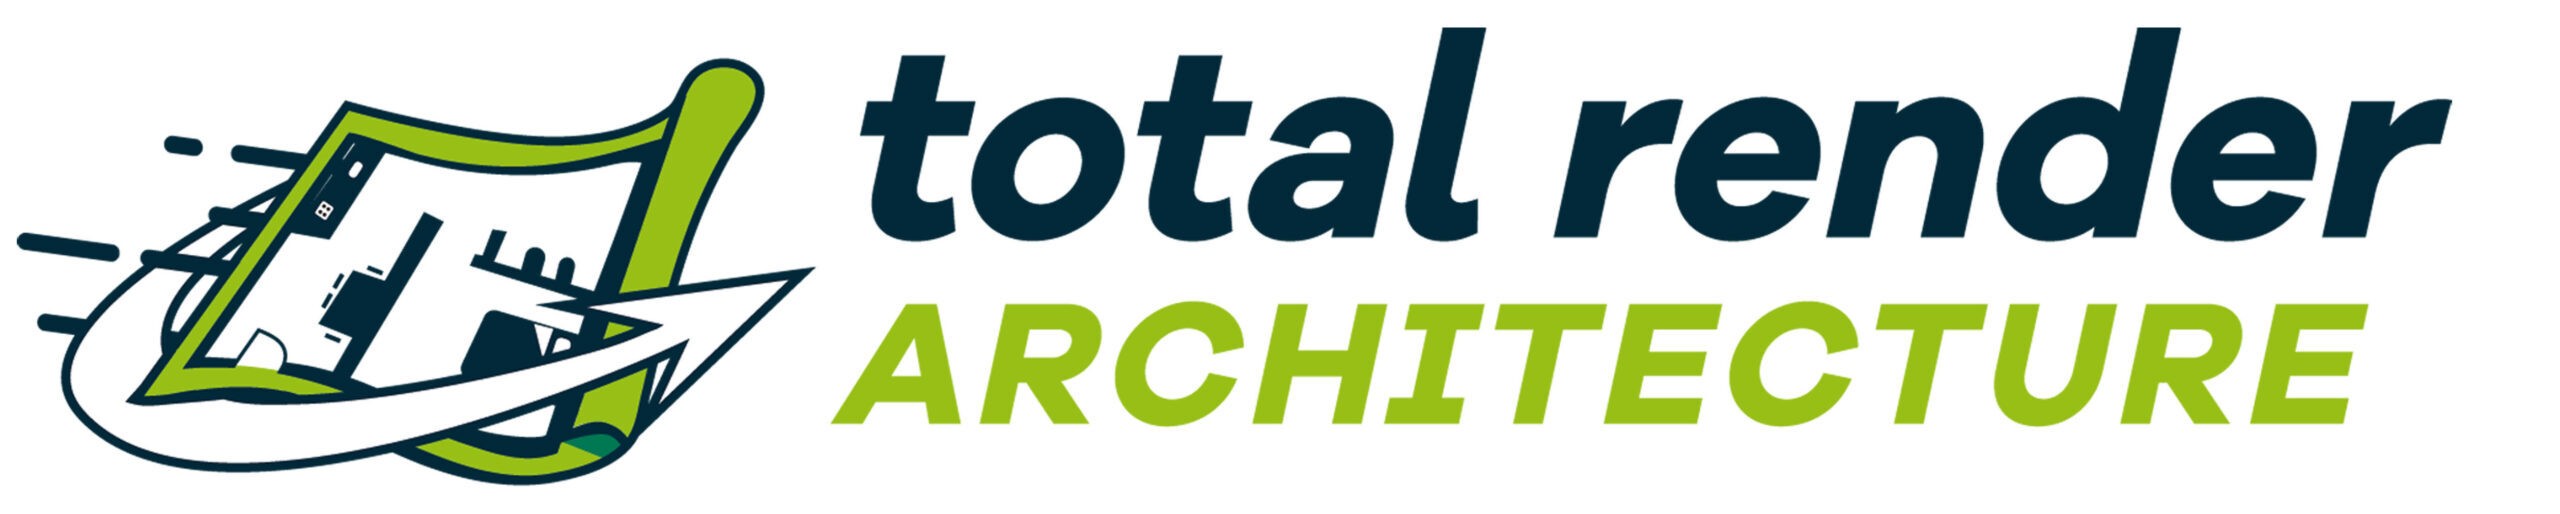 logo-total-render-architecture